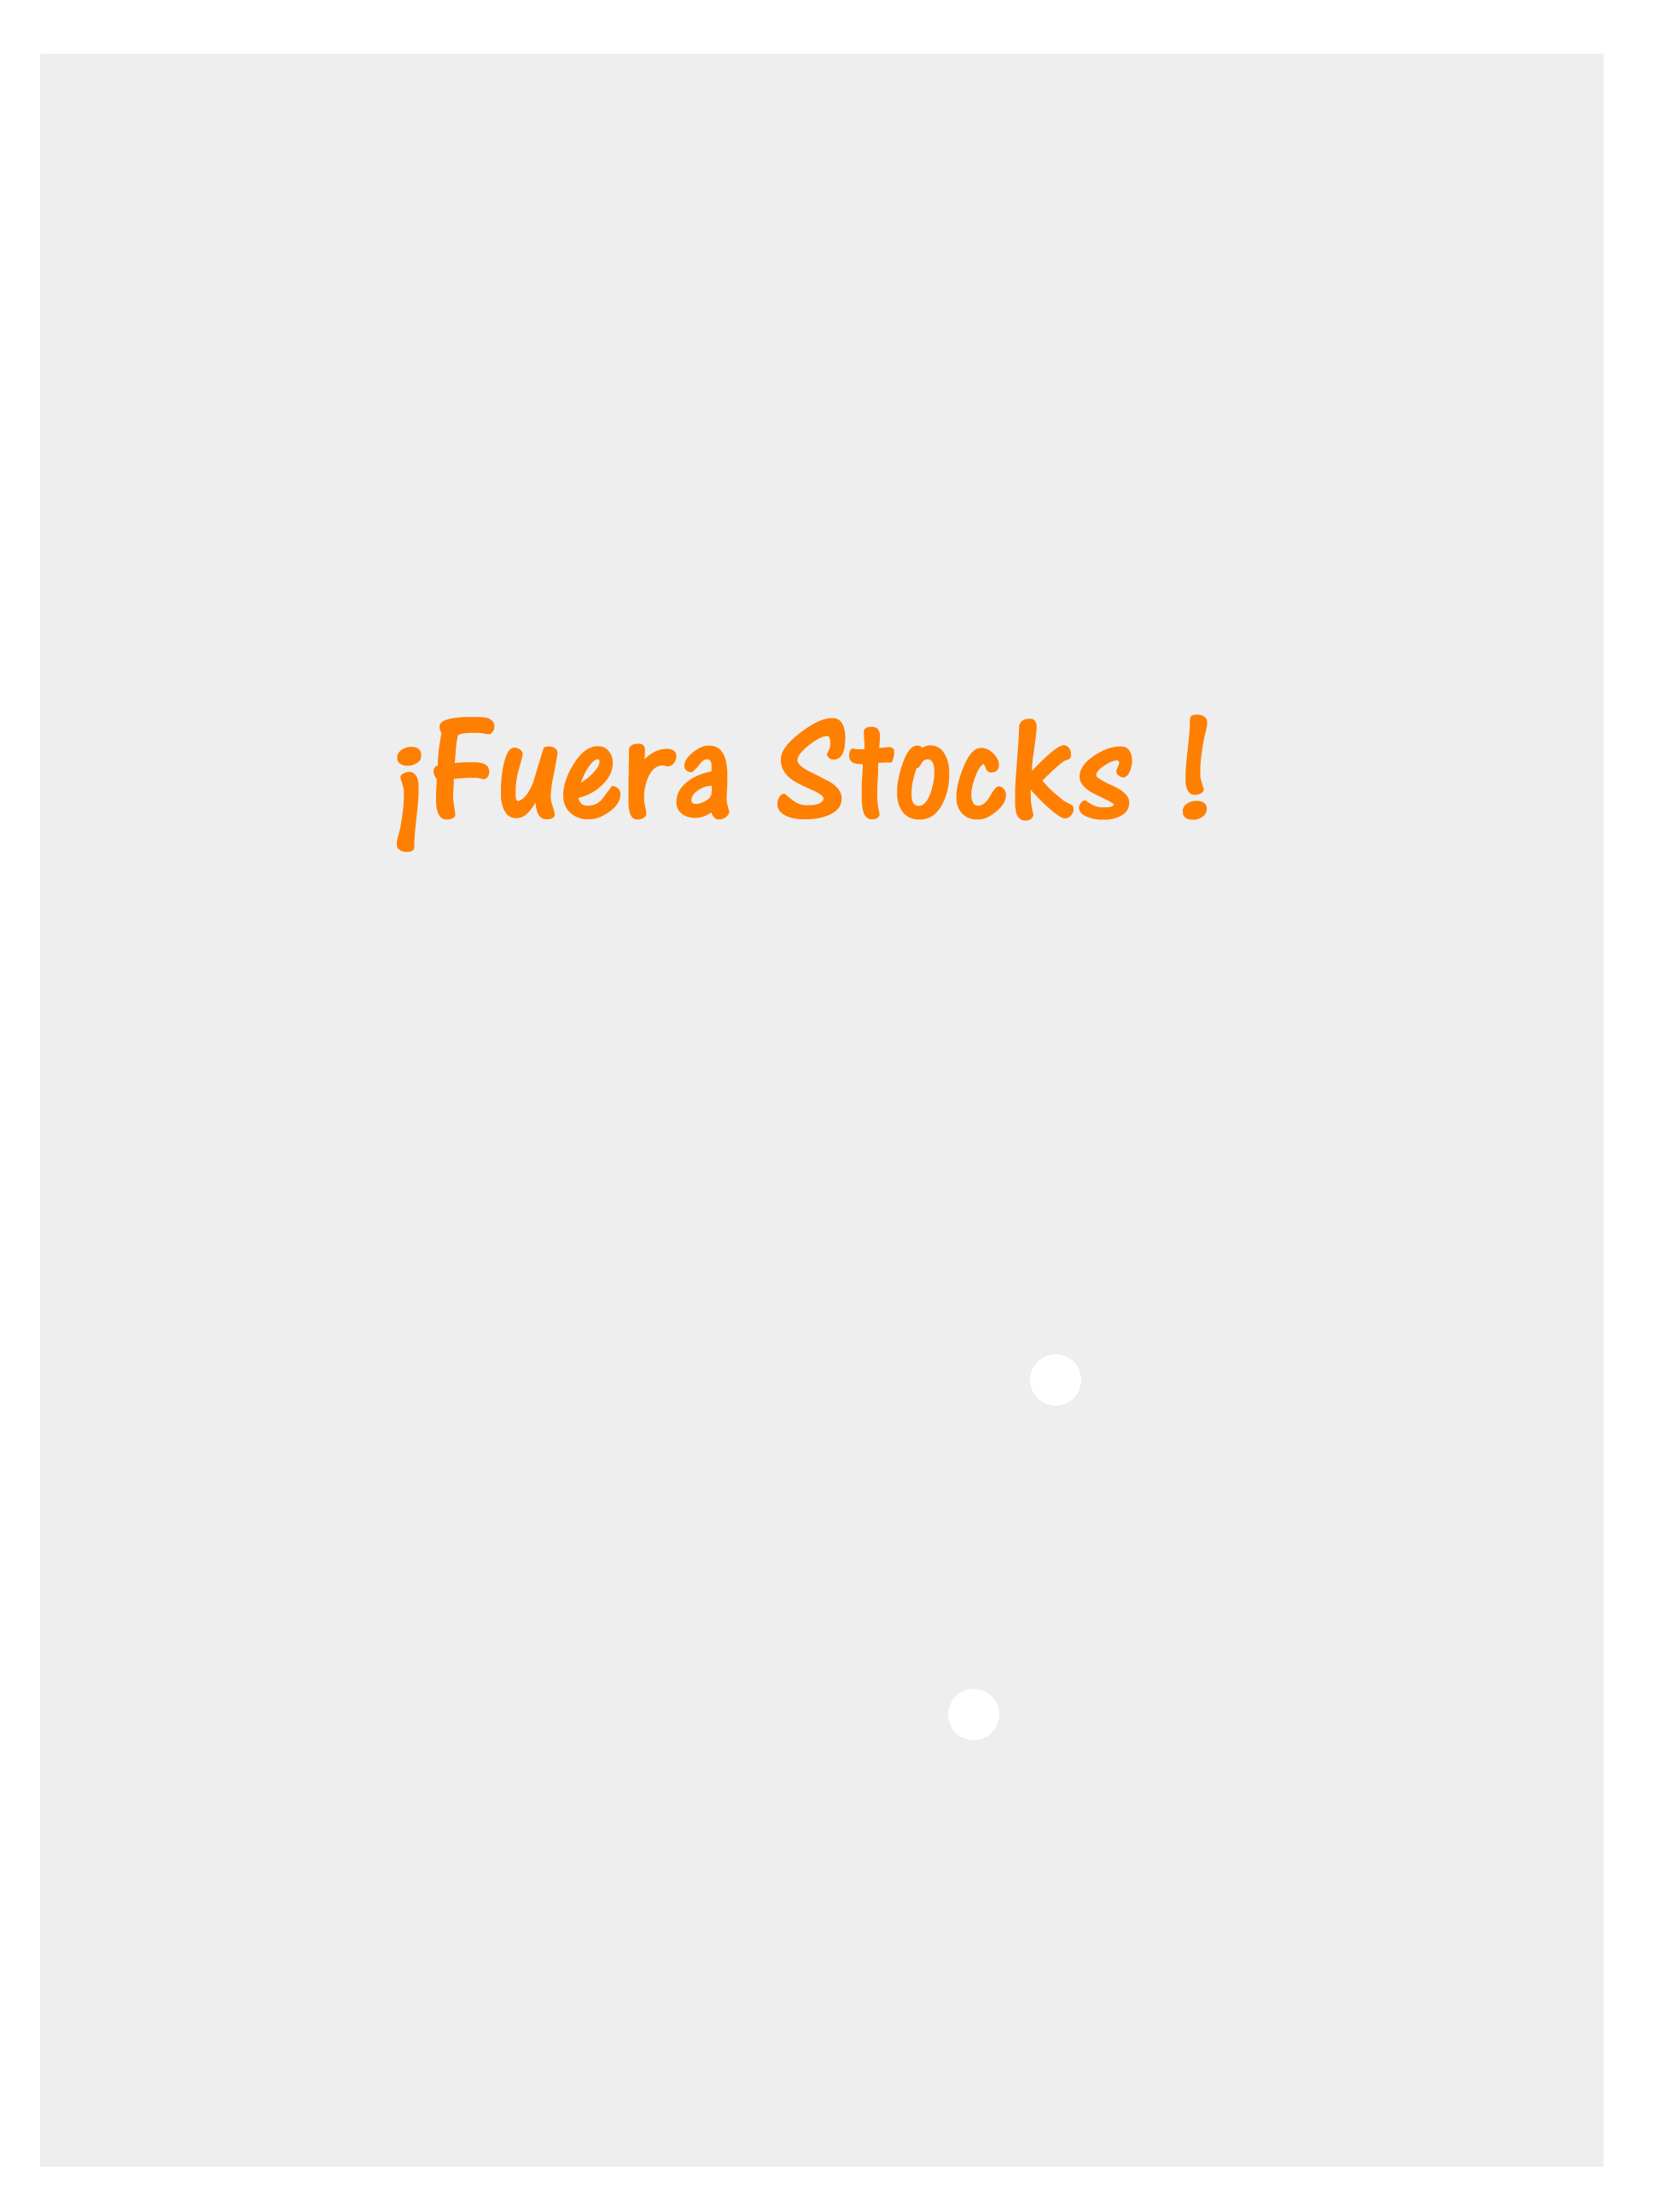 stocks_fuera-0 